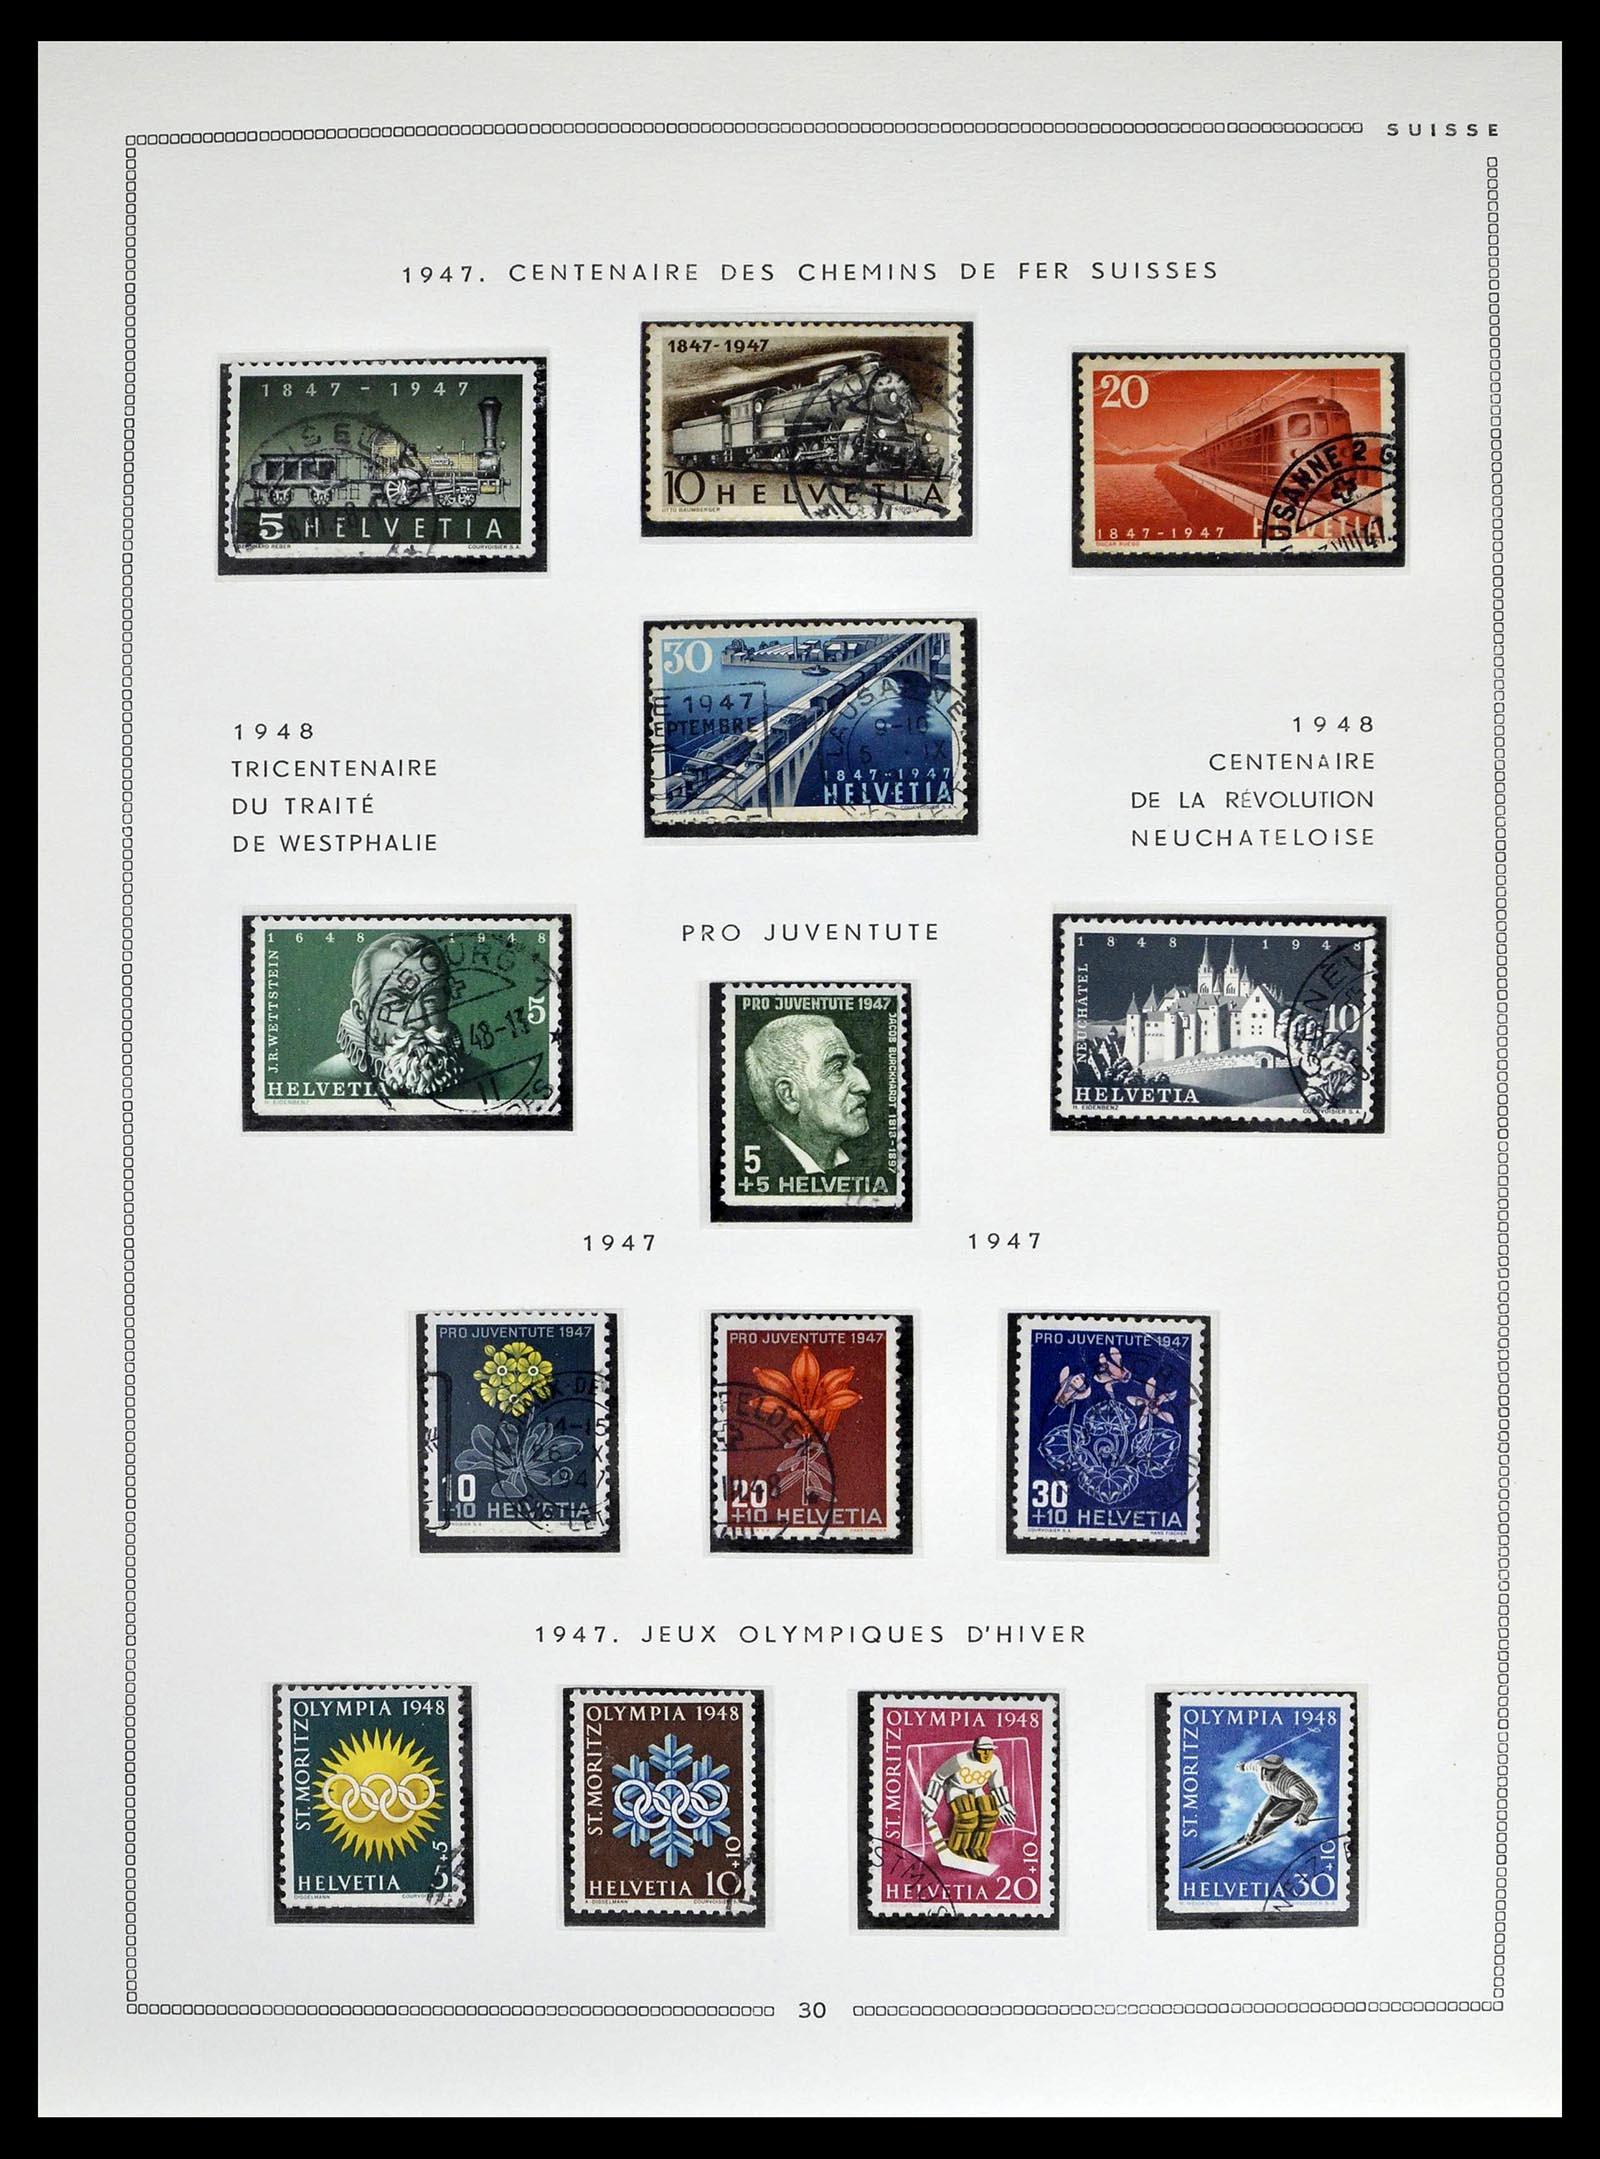 39094 0028 - Stamp collection 39094 Switzerland 1850-2005.